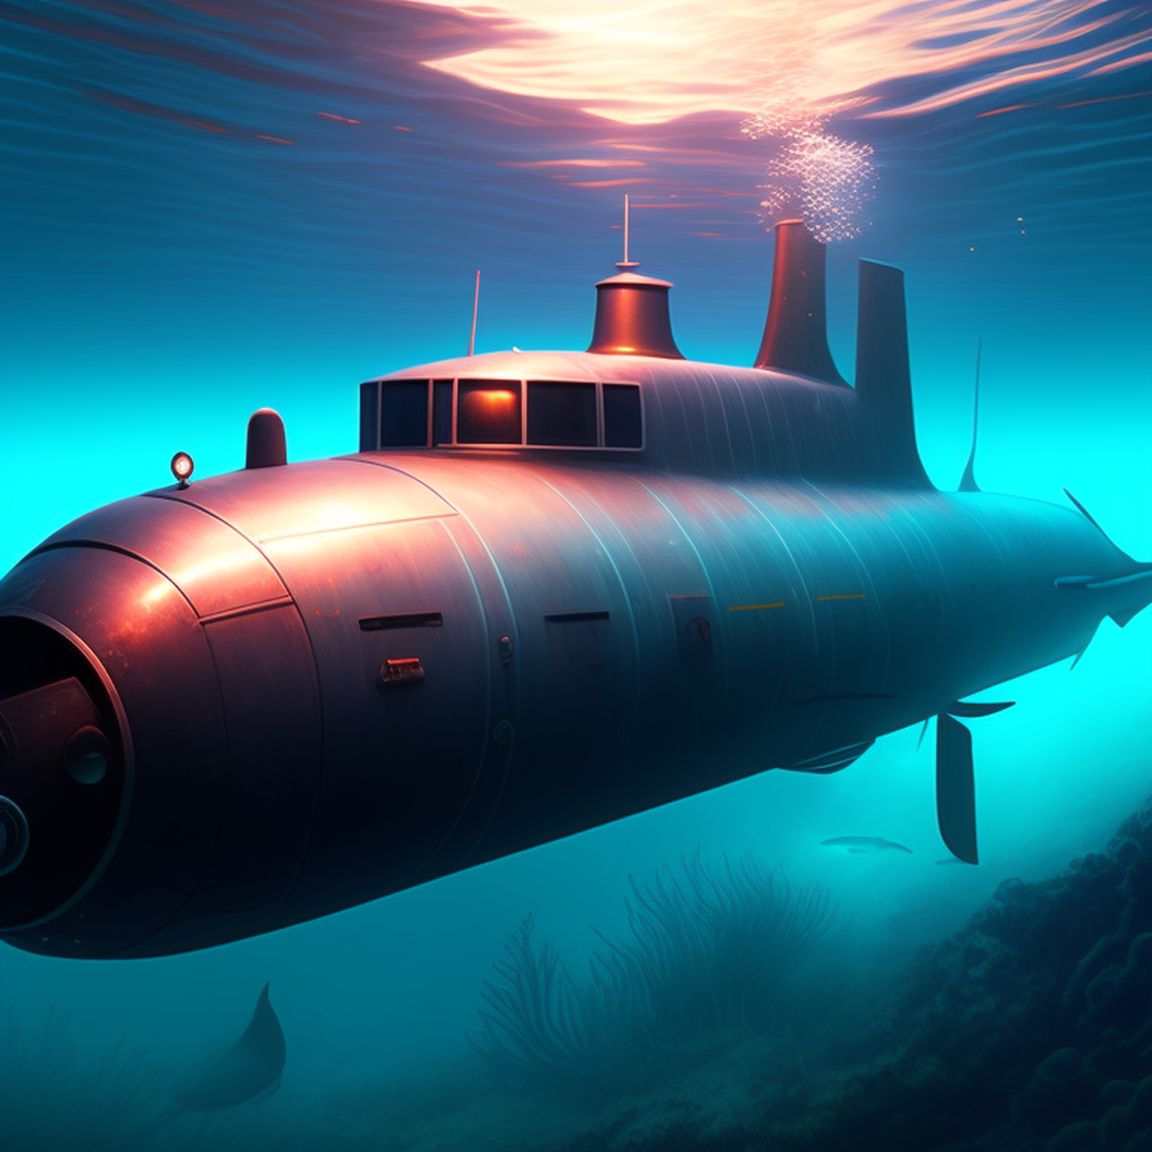 submarine underwater missile